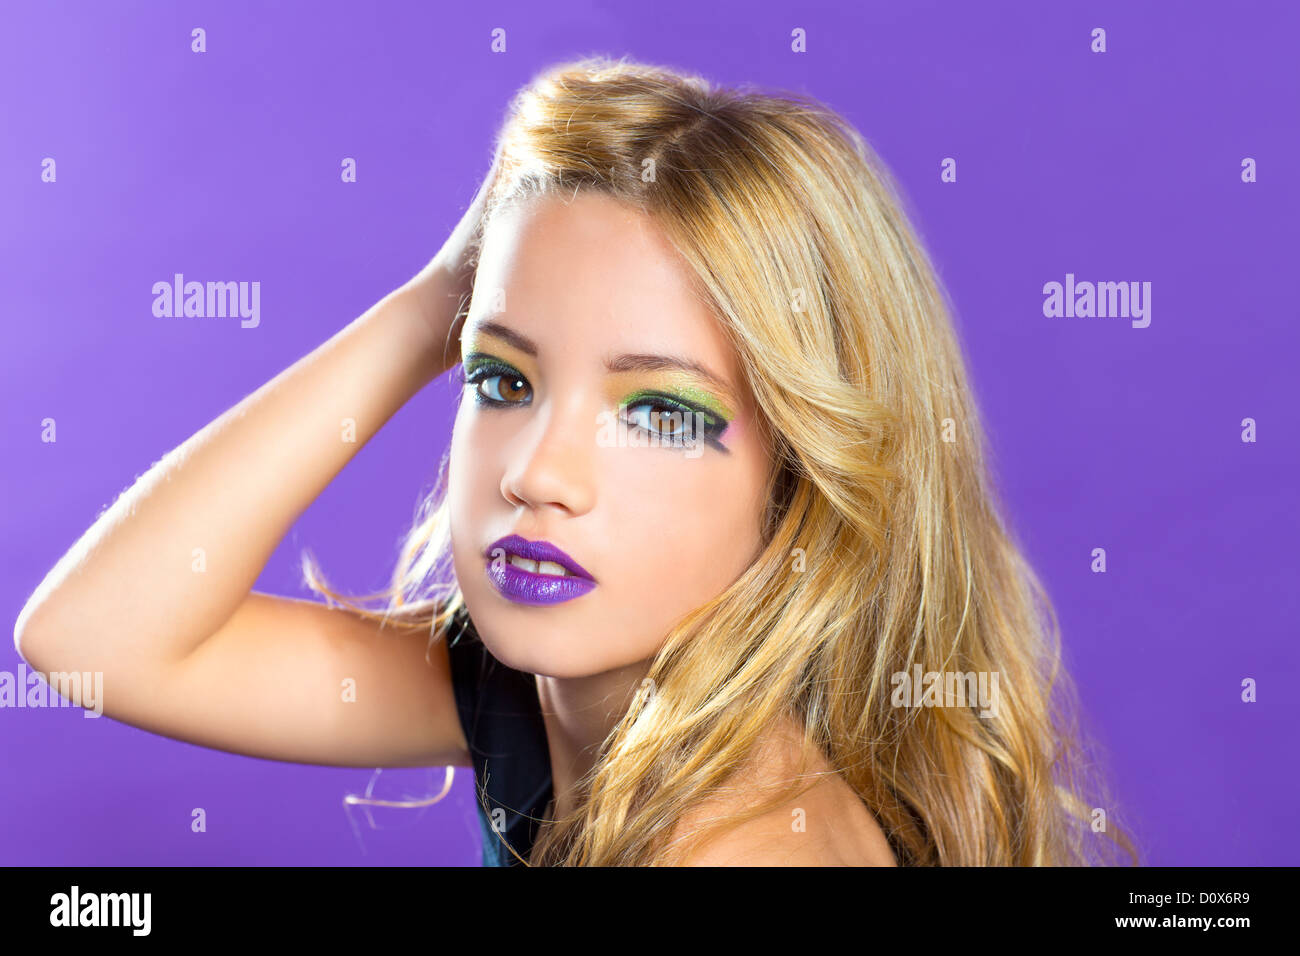 Blond children fashiondoll girl fashion makeup on purple background Stock Photo